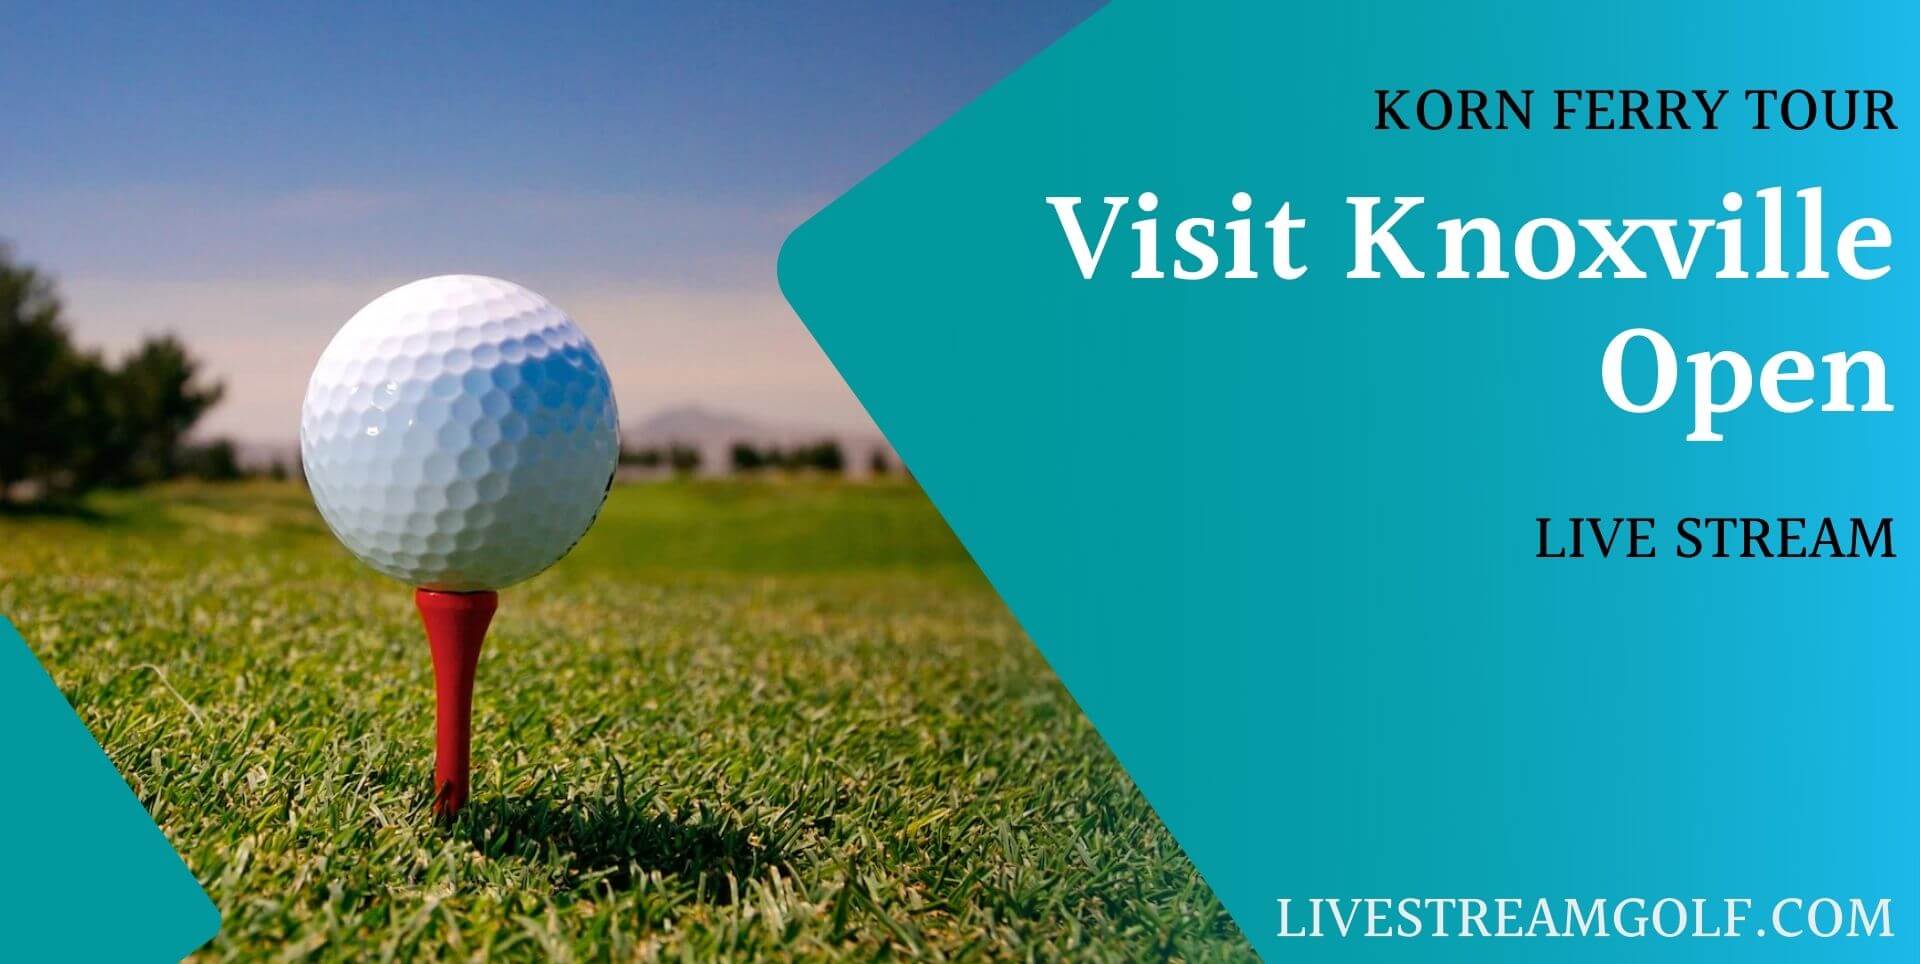 visit-knoxville-open-live-stream-golf-korn-ferry